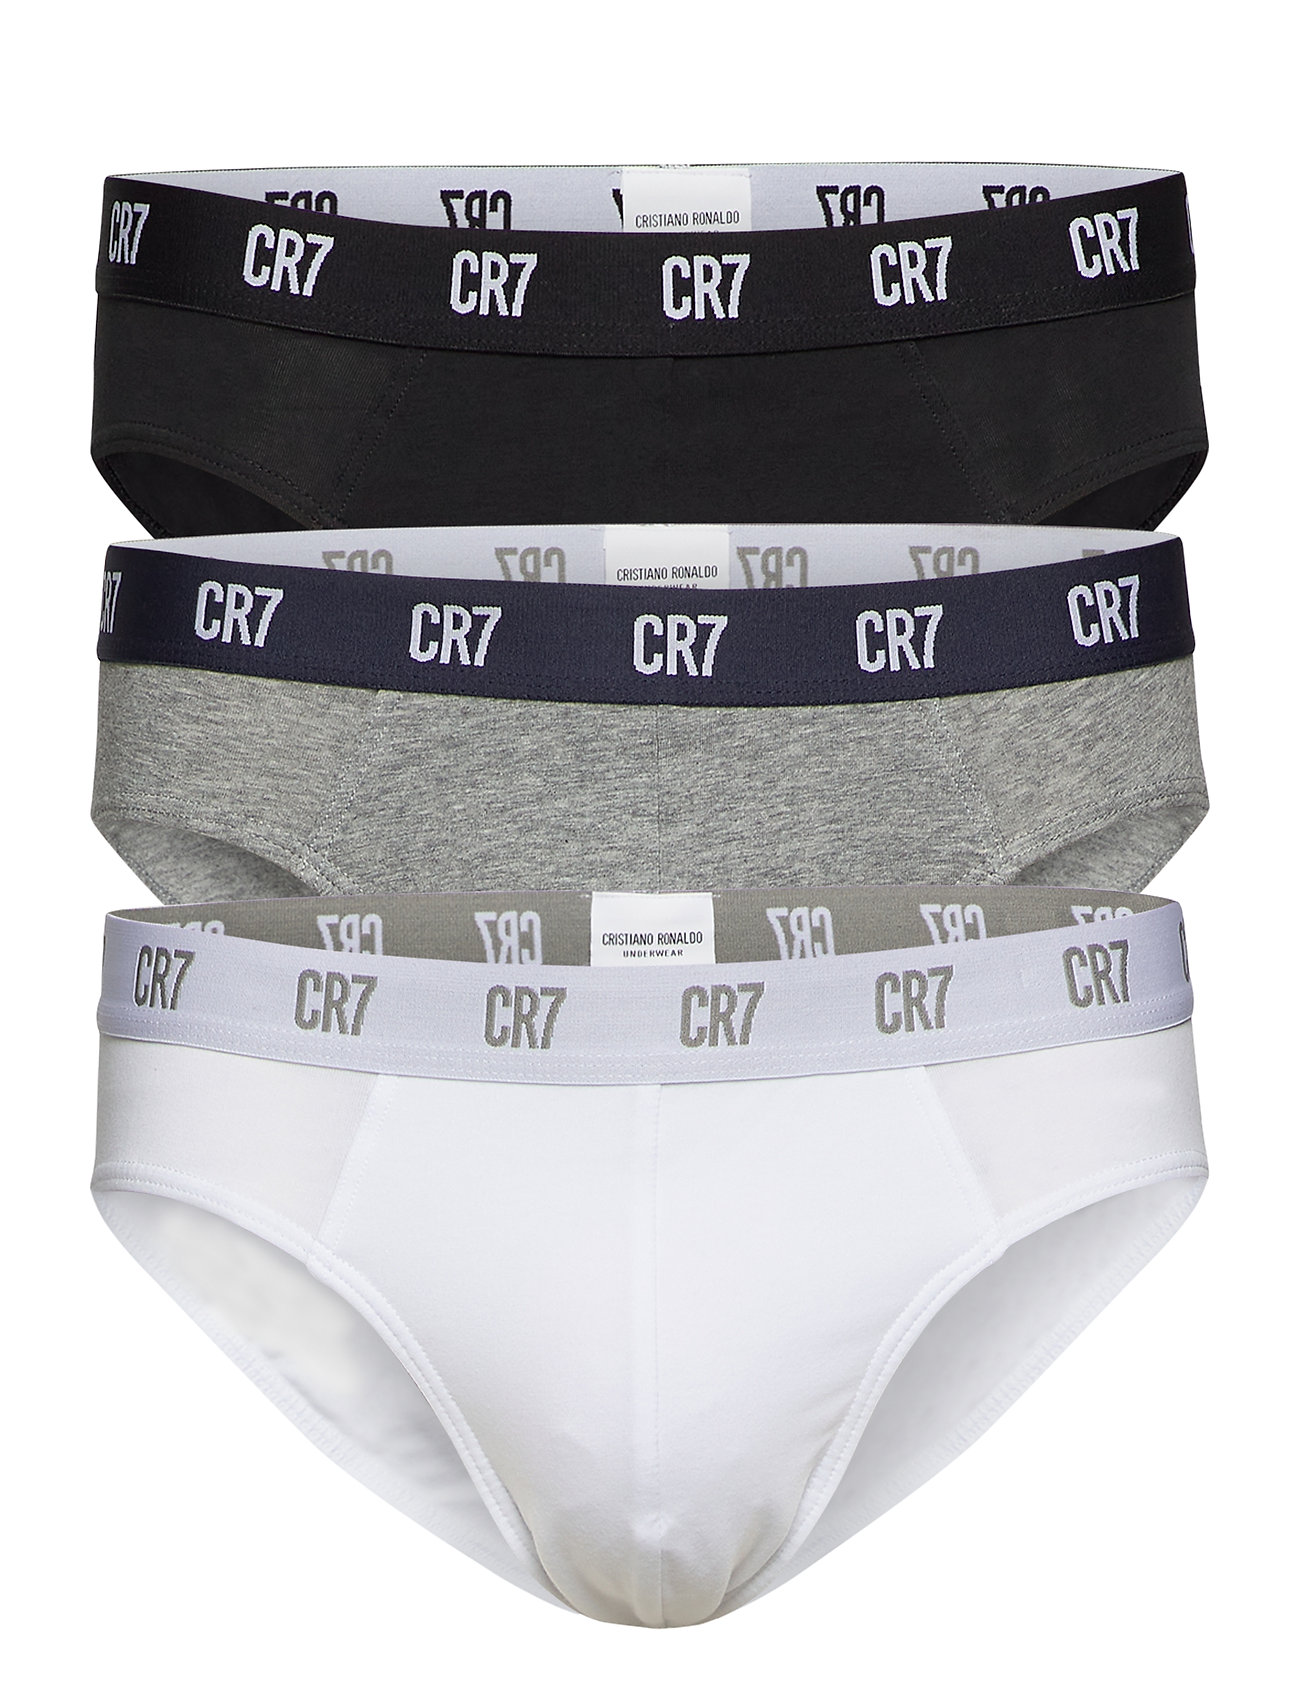 CR7 Cr7 Basic, Brief, 3-pack - Briefs - Boozt.com